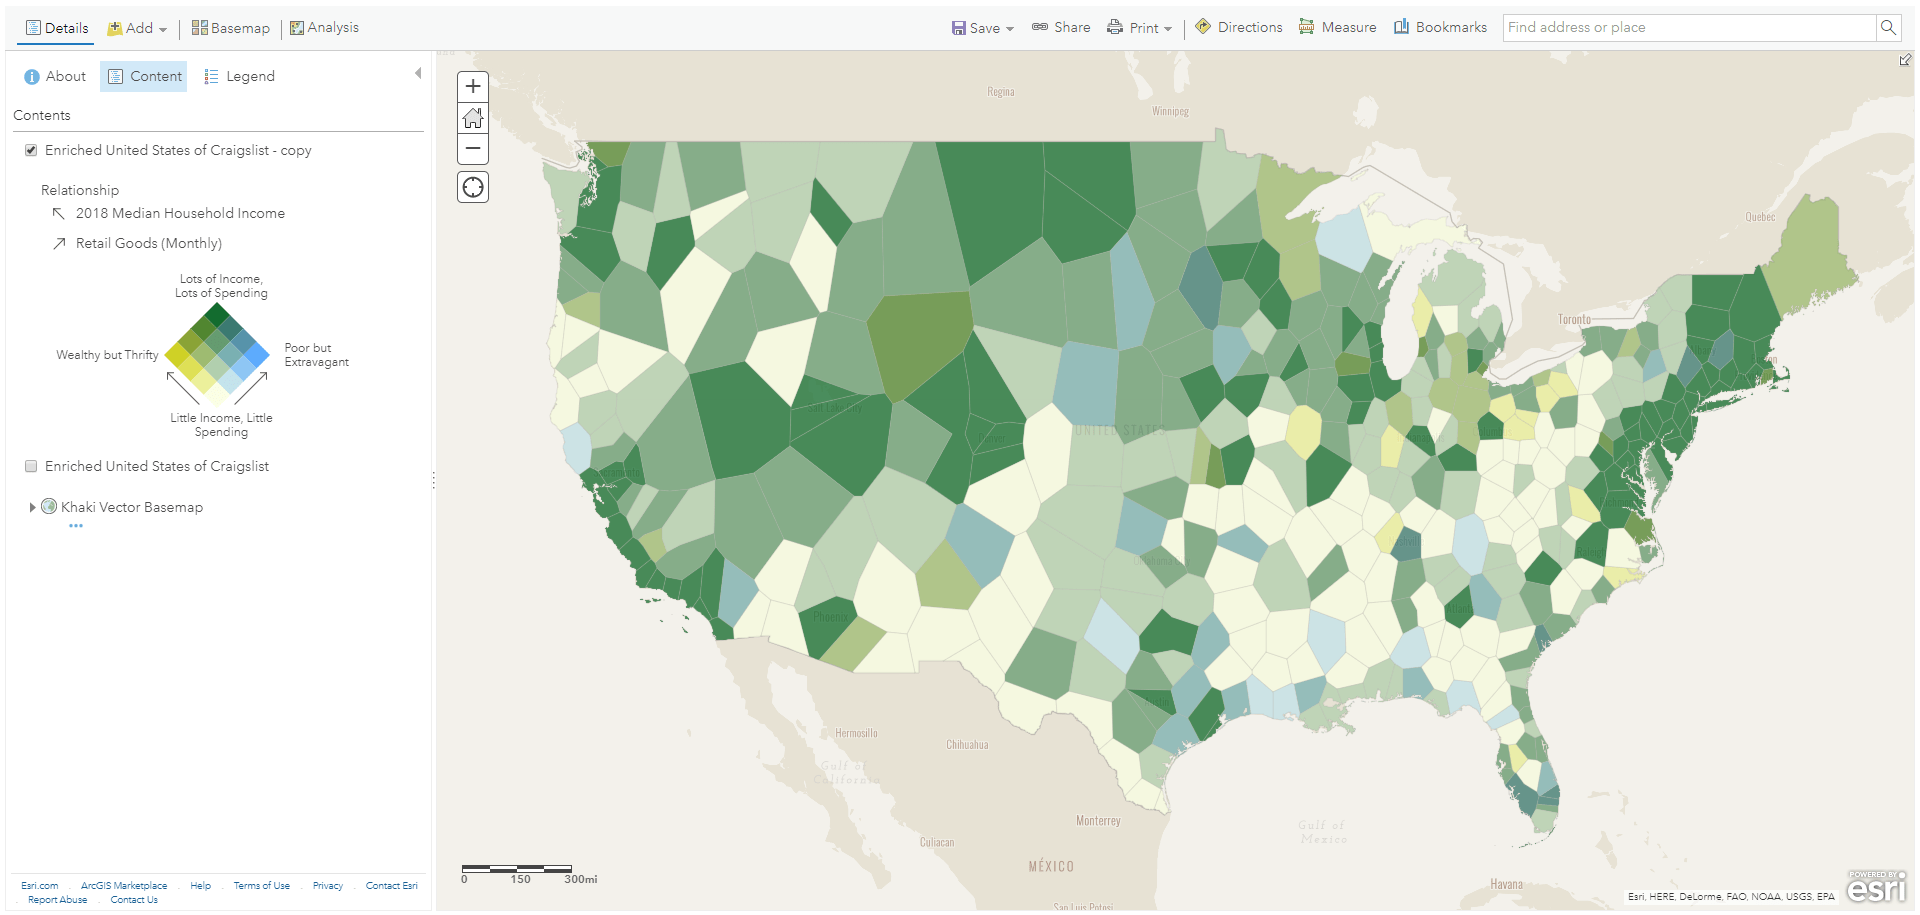 United States of Craigslist, with Demographics